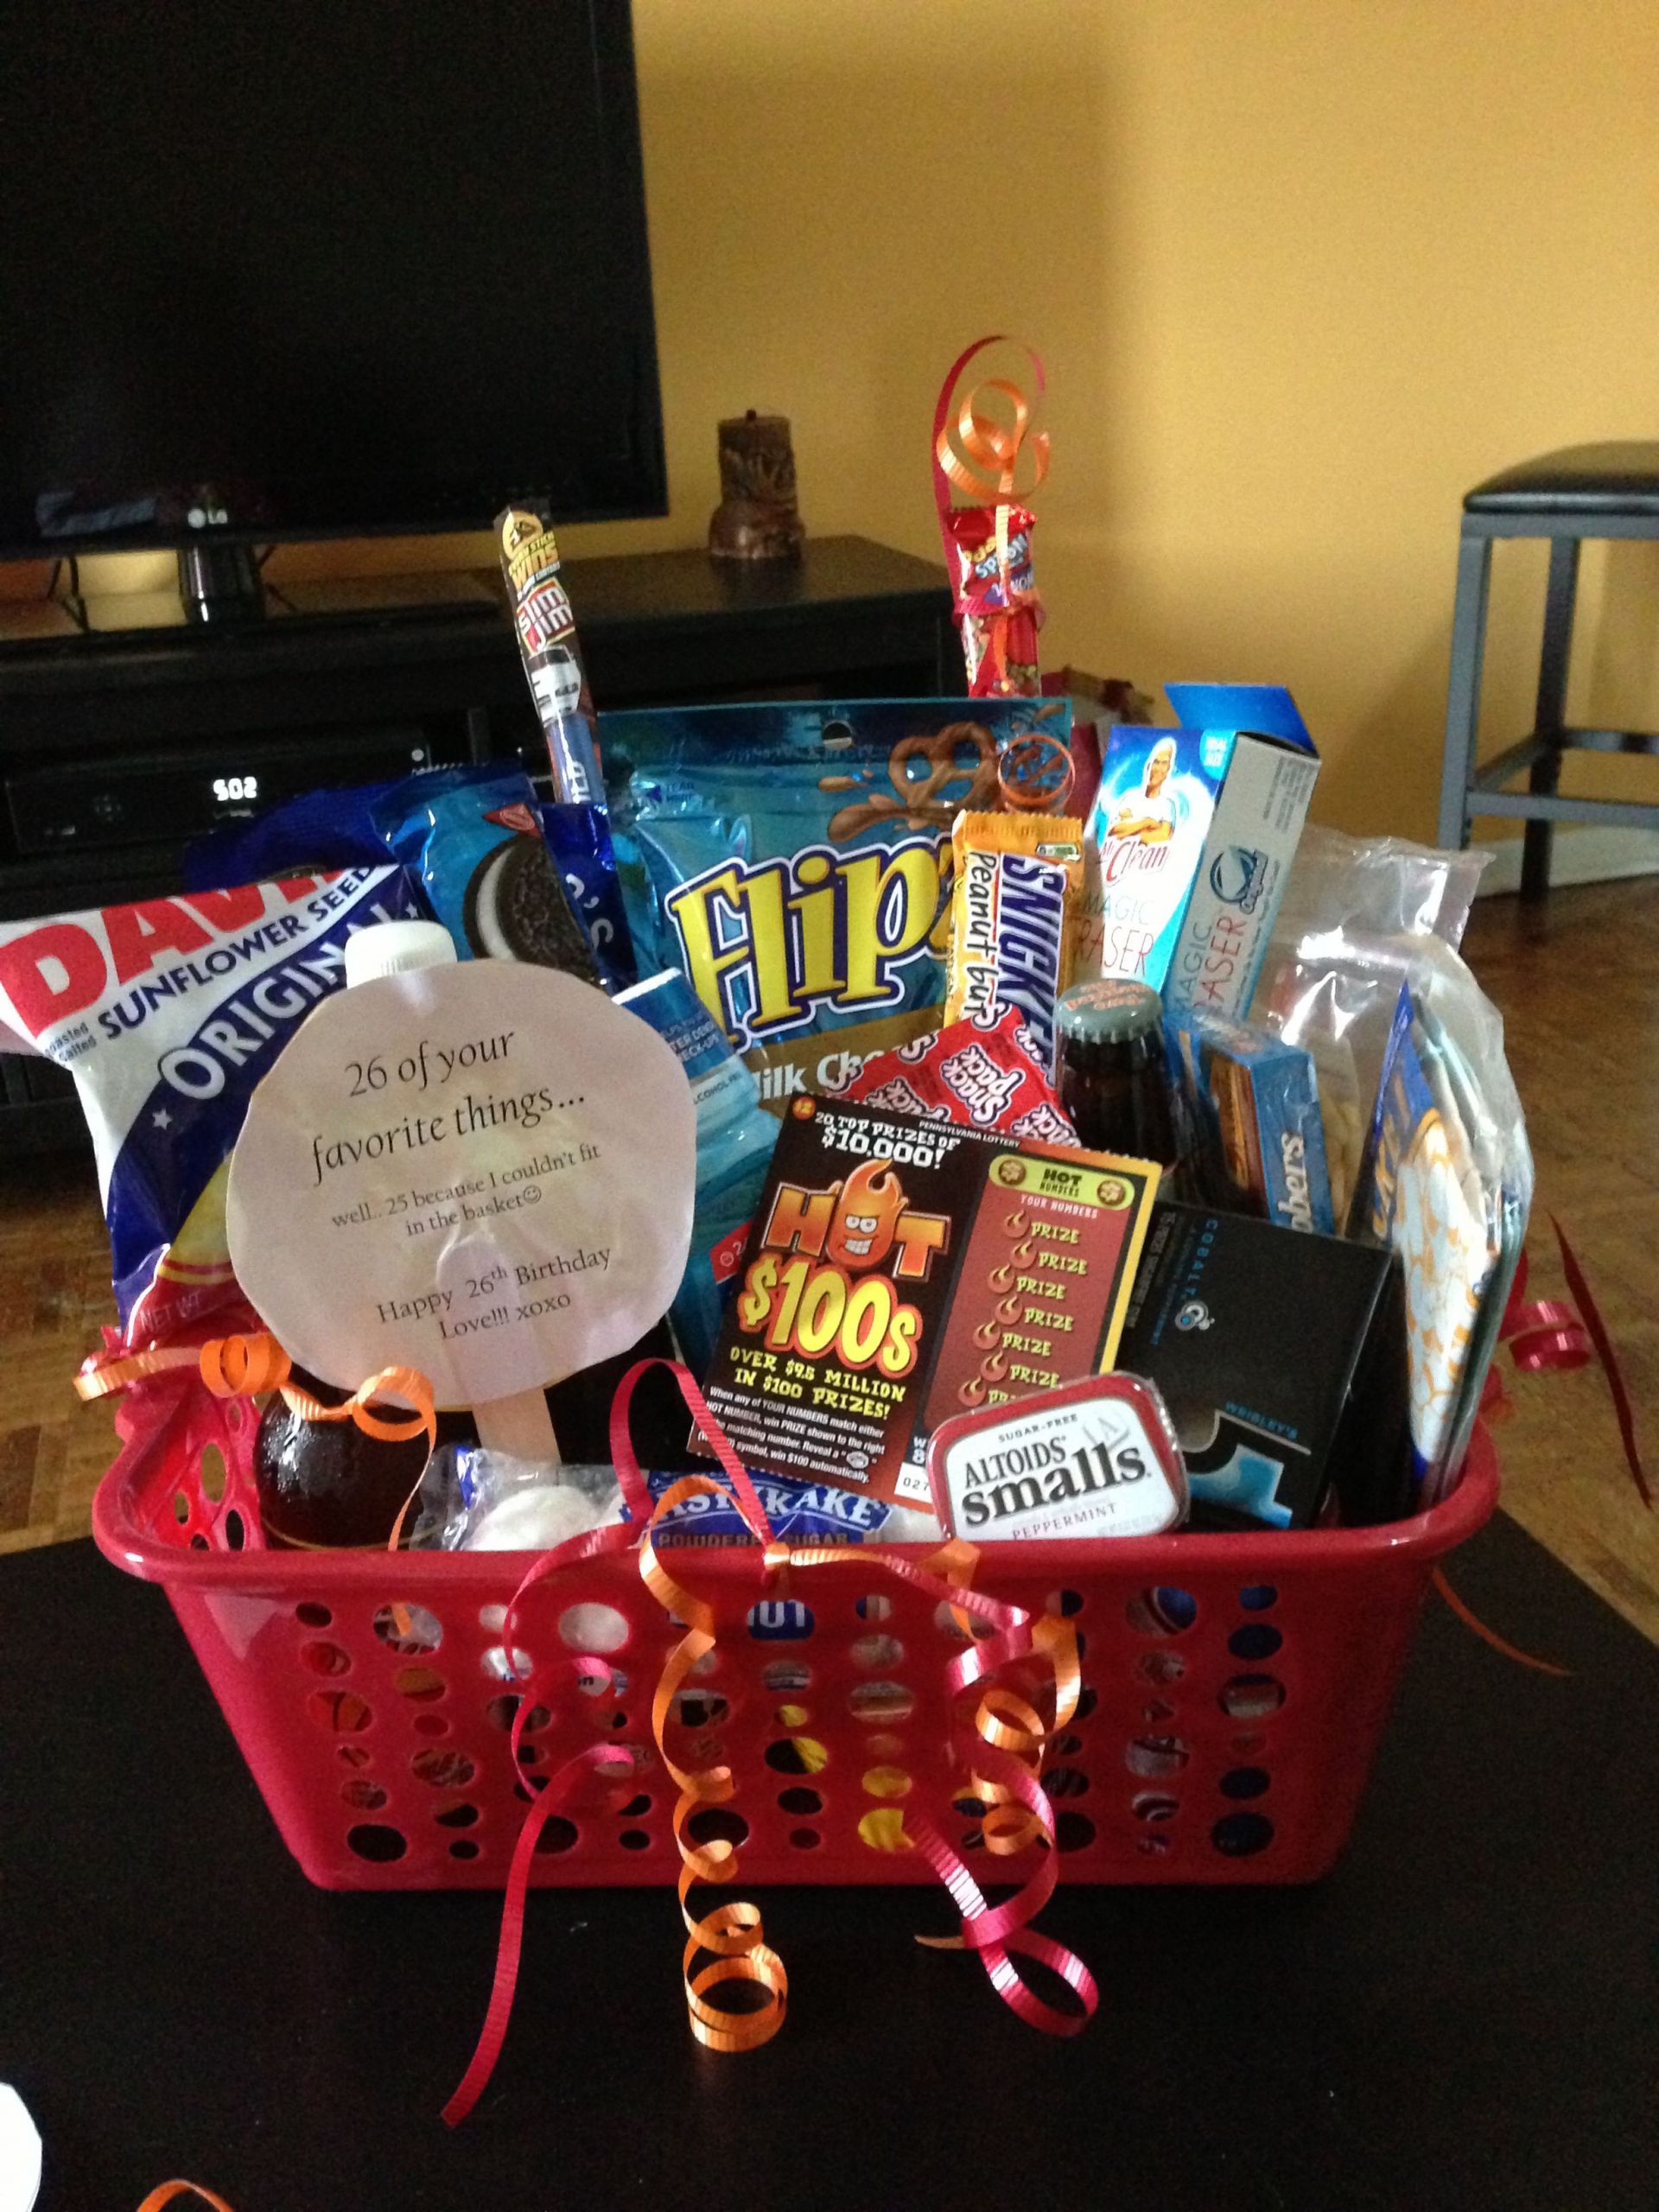 Good Gift Ideas For Boyfriend
 Boyfriend birthday basket 26 of his favorite things for